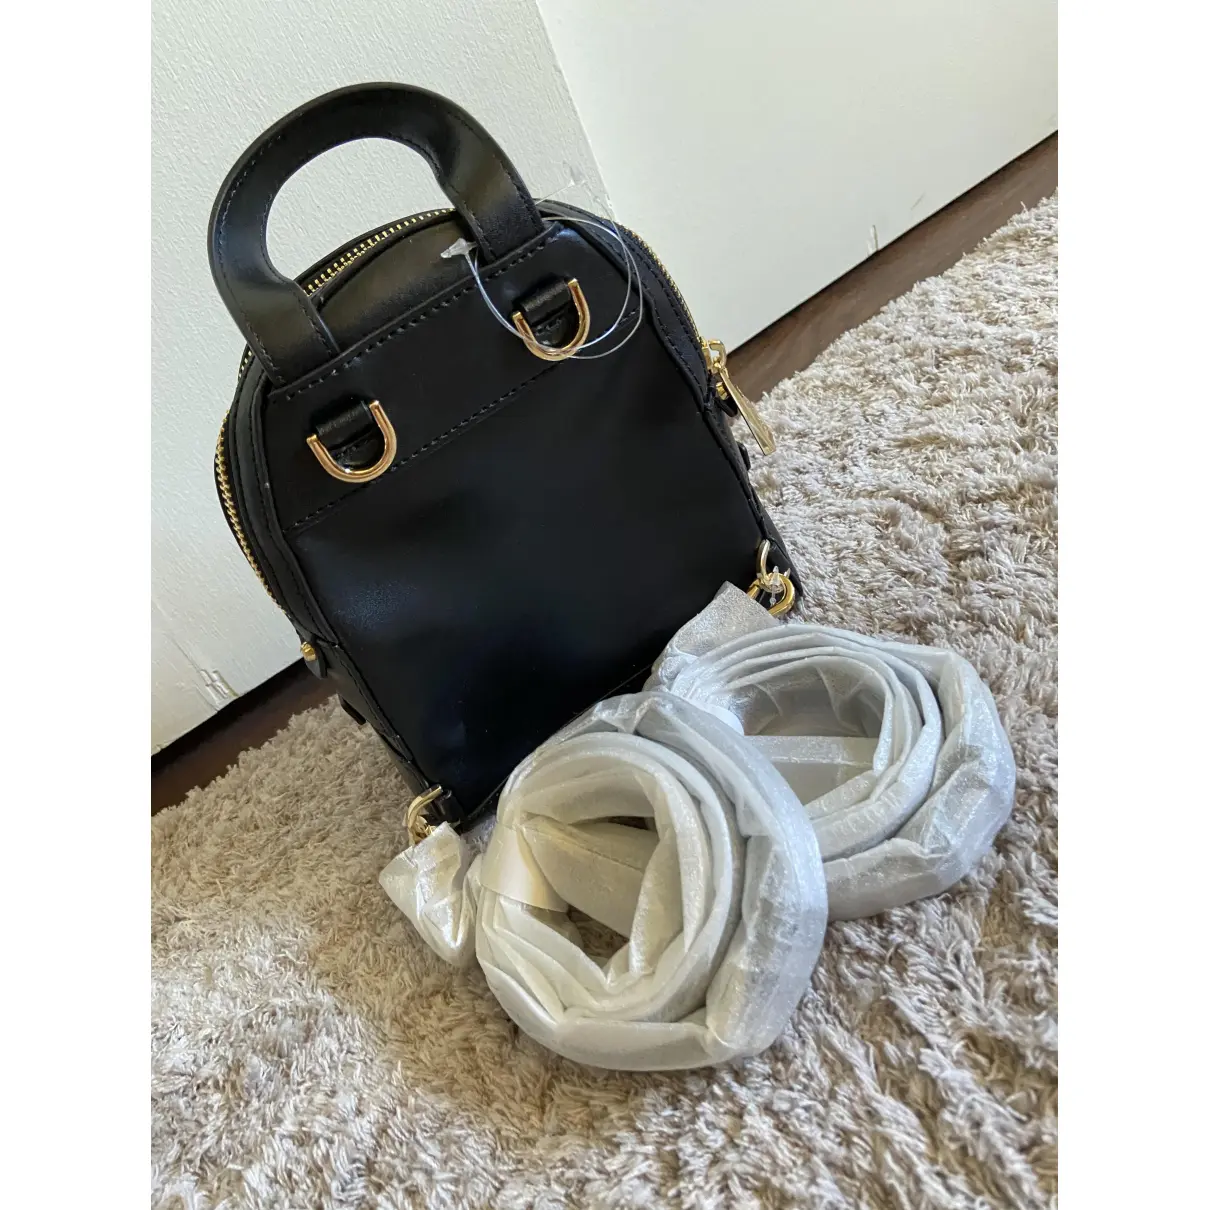 Buy Michael Kors Rhea leather mini bag online